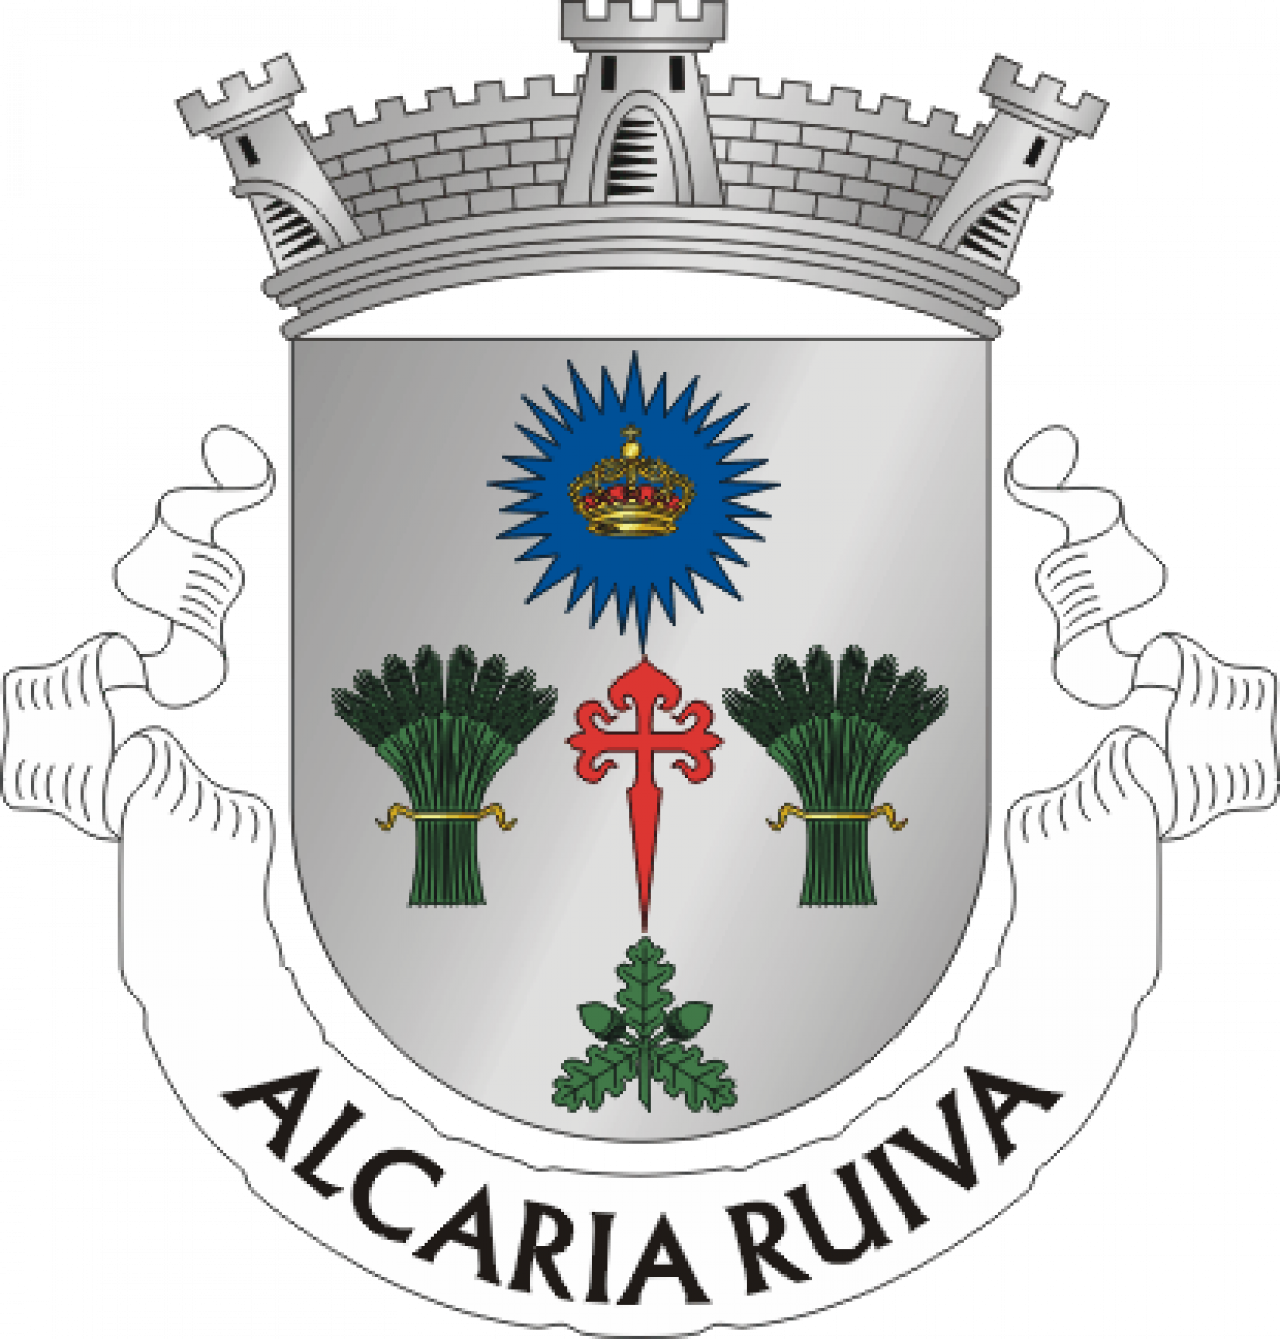 Adesão da Junta de Freguesia Alcaria Ruiva